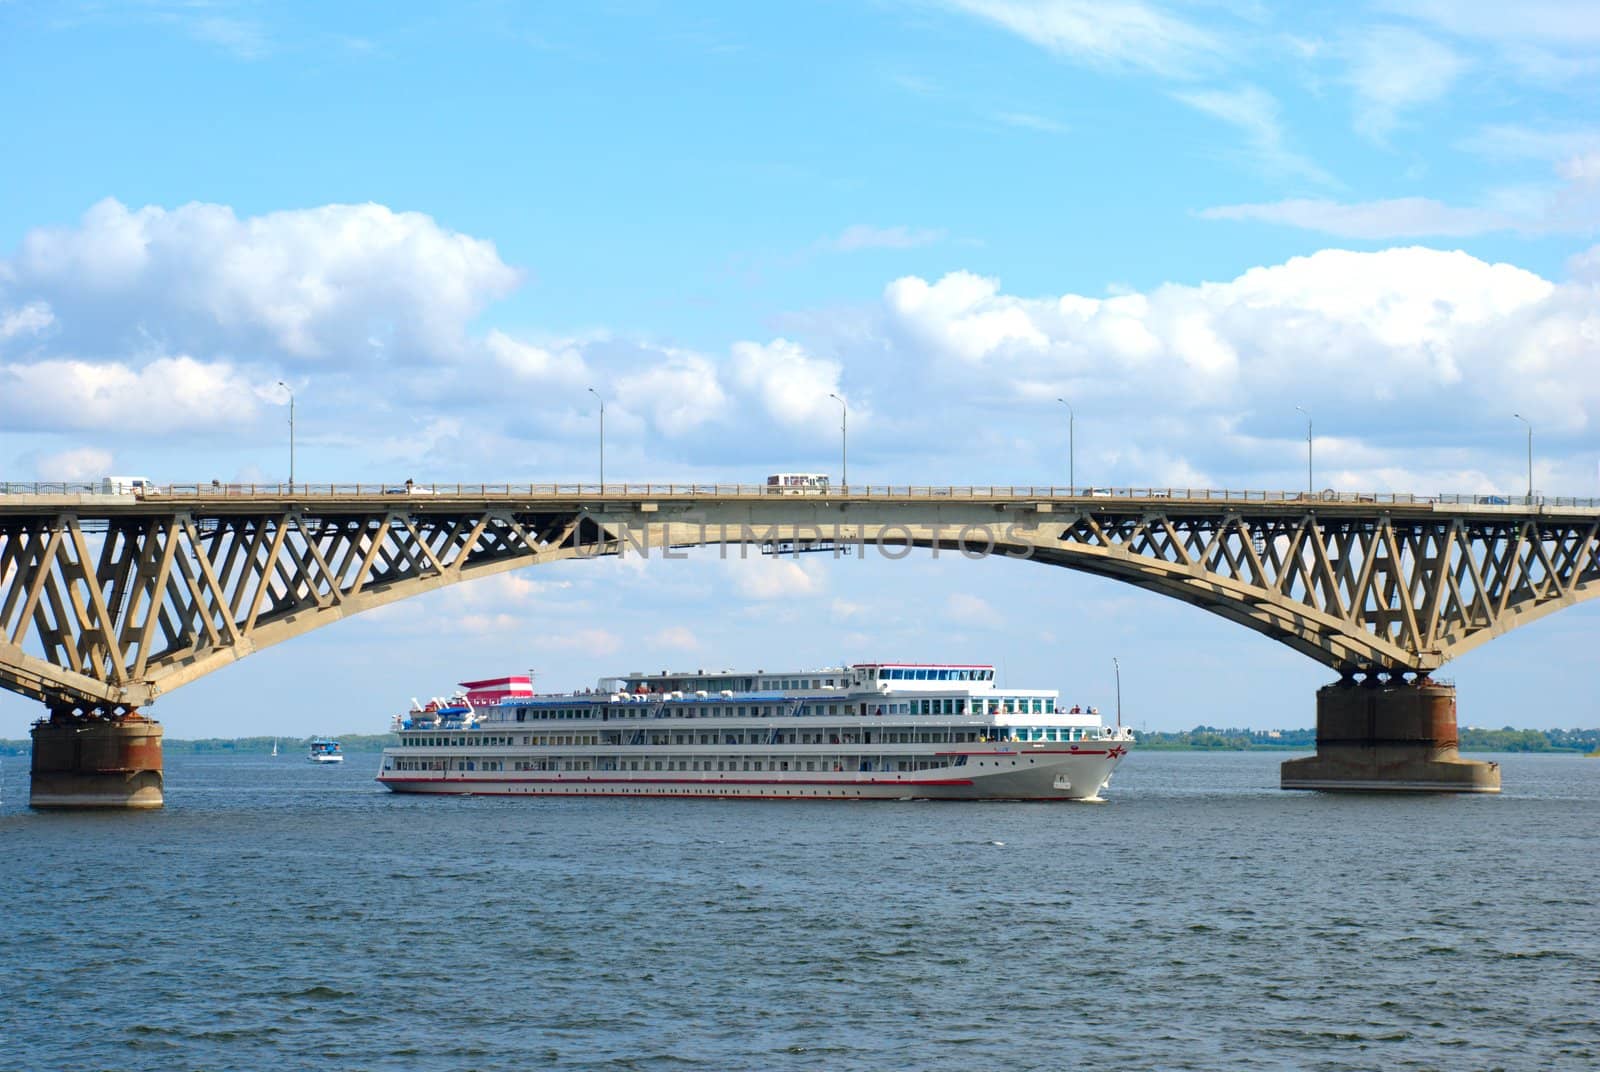 A ship passes under the bridge through the Volga River in Saratov.